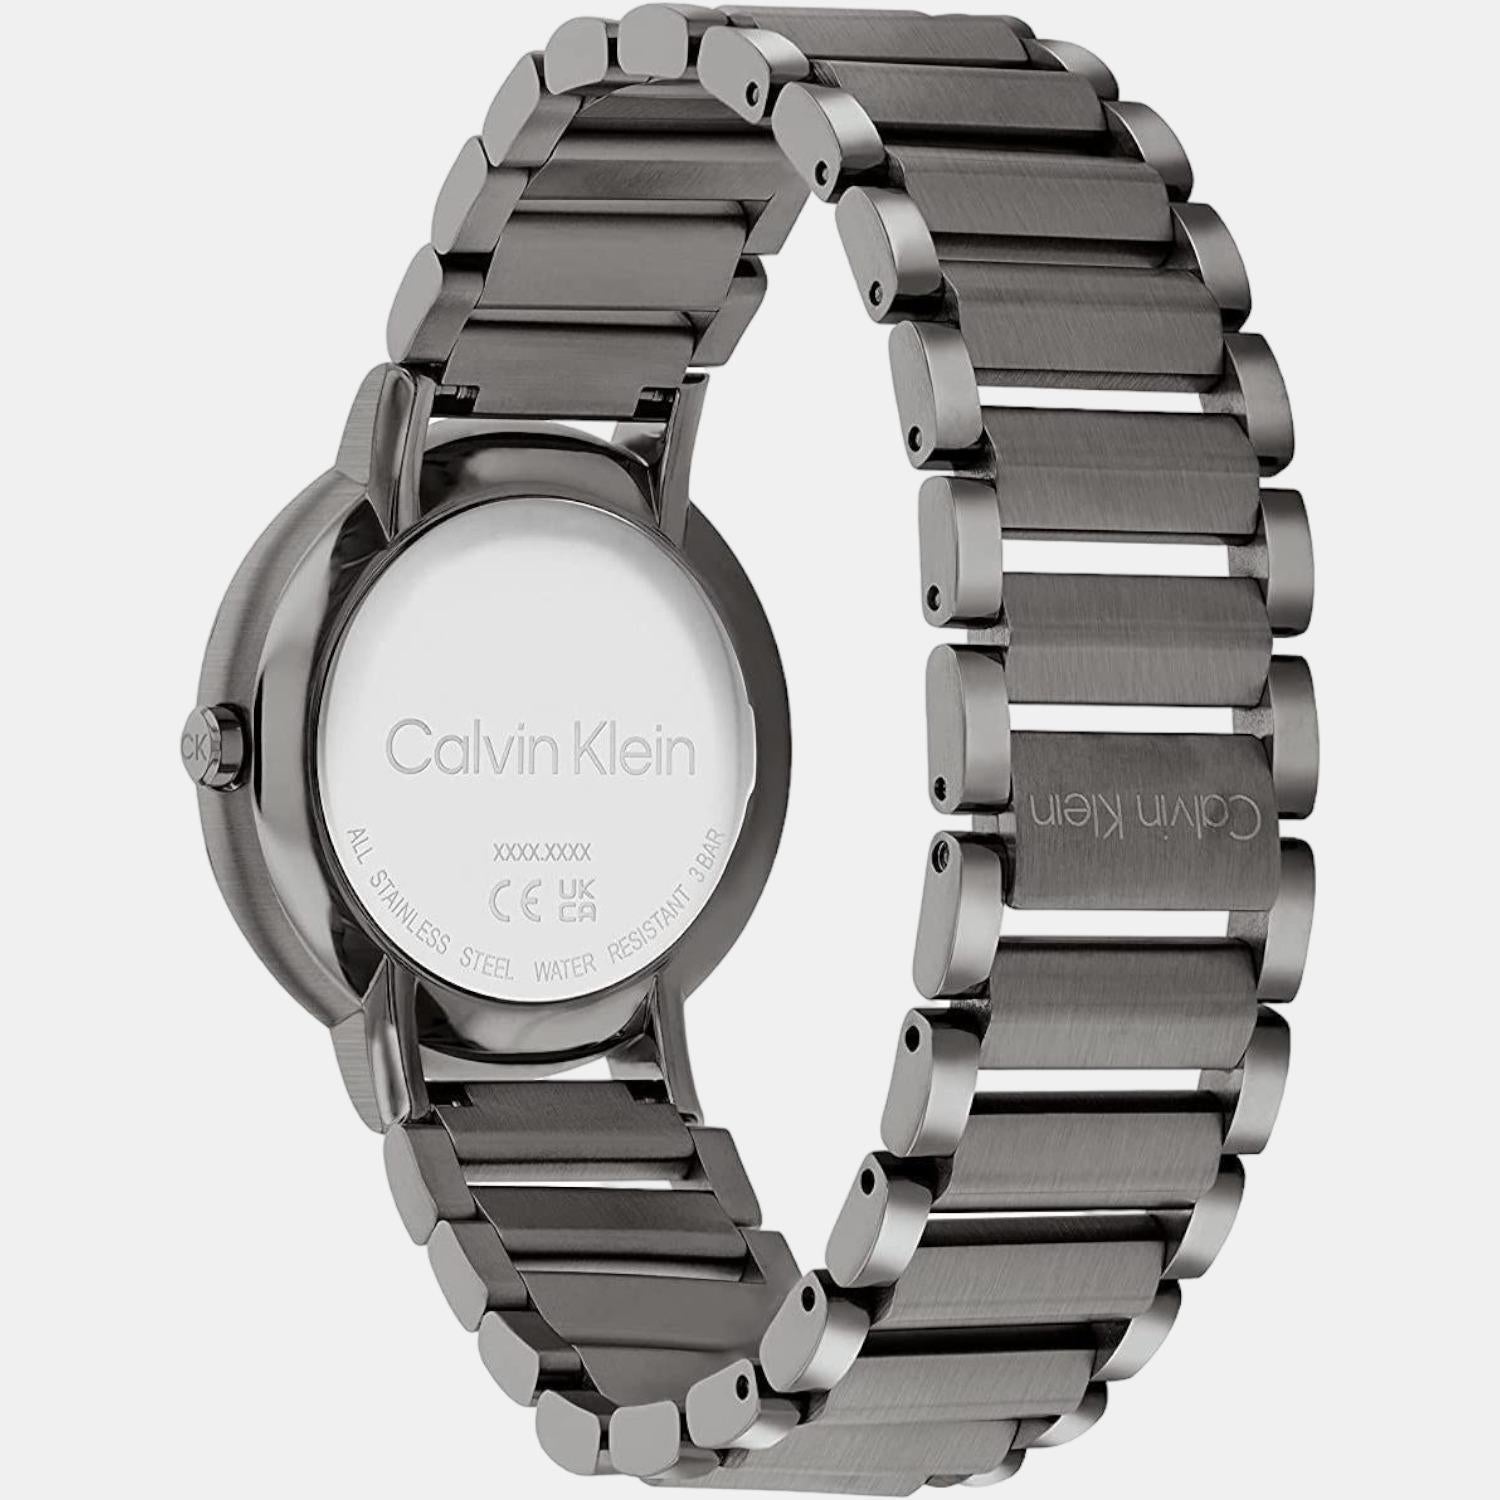 Calvin Klein Female Analog Stainless Steel Watch